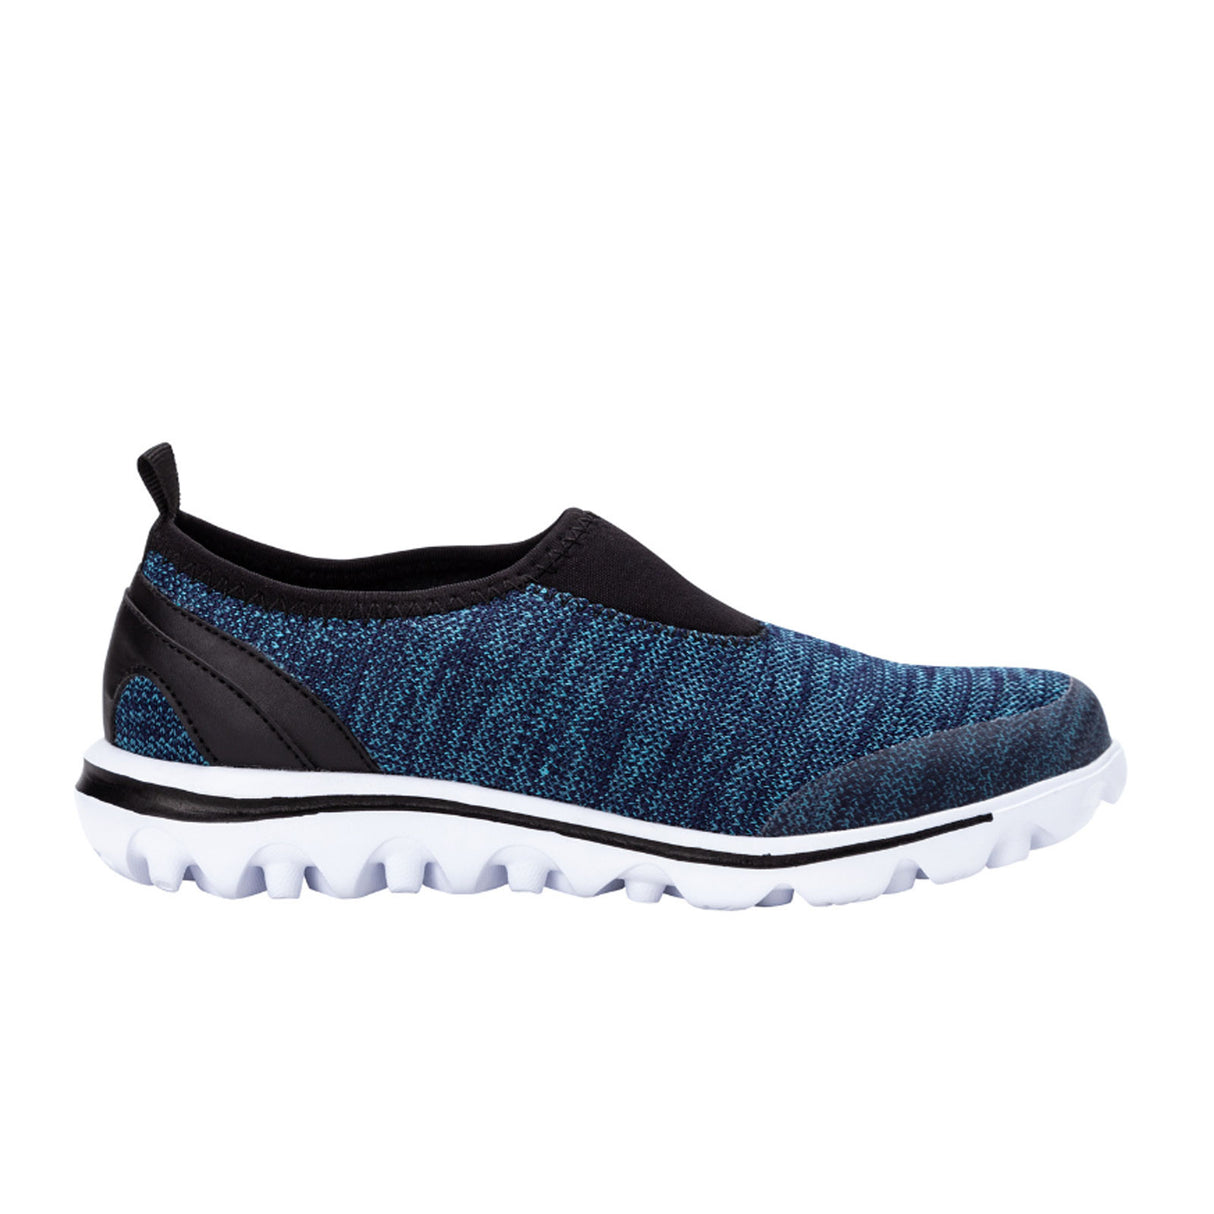 Propet TravelActiv Slip On Sneaker (Women) - Blue Heather Dress-Casual - Slip Ons - The Heel Shoe Fitters